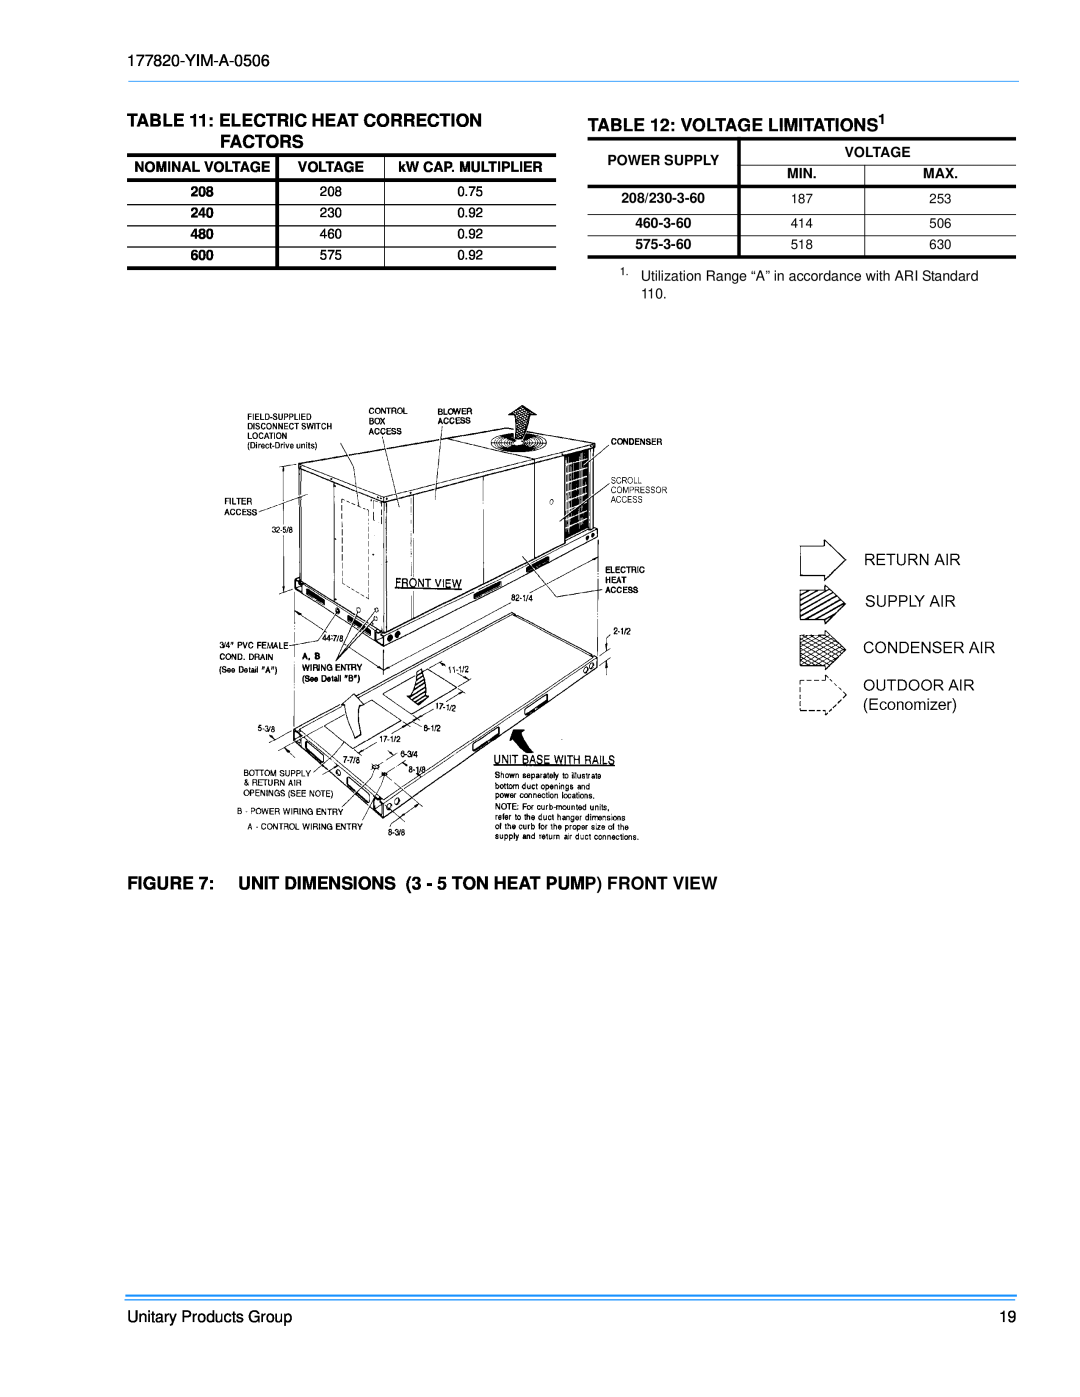 York 048 & 060 Electric Heat Correction Factors, VOLTAGE LIMITATIONS1, Nominal Voltage, kW CAP. MULTIPLIER, Power Supply 